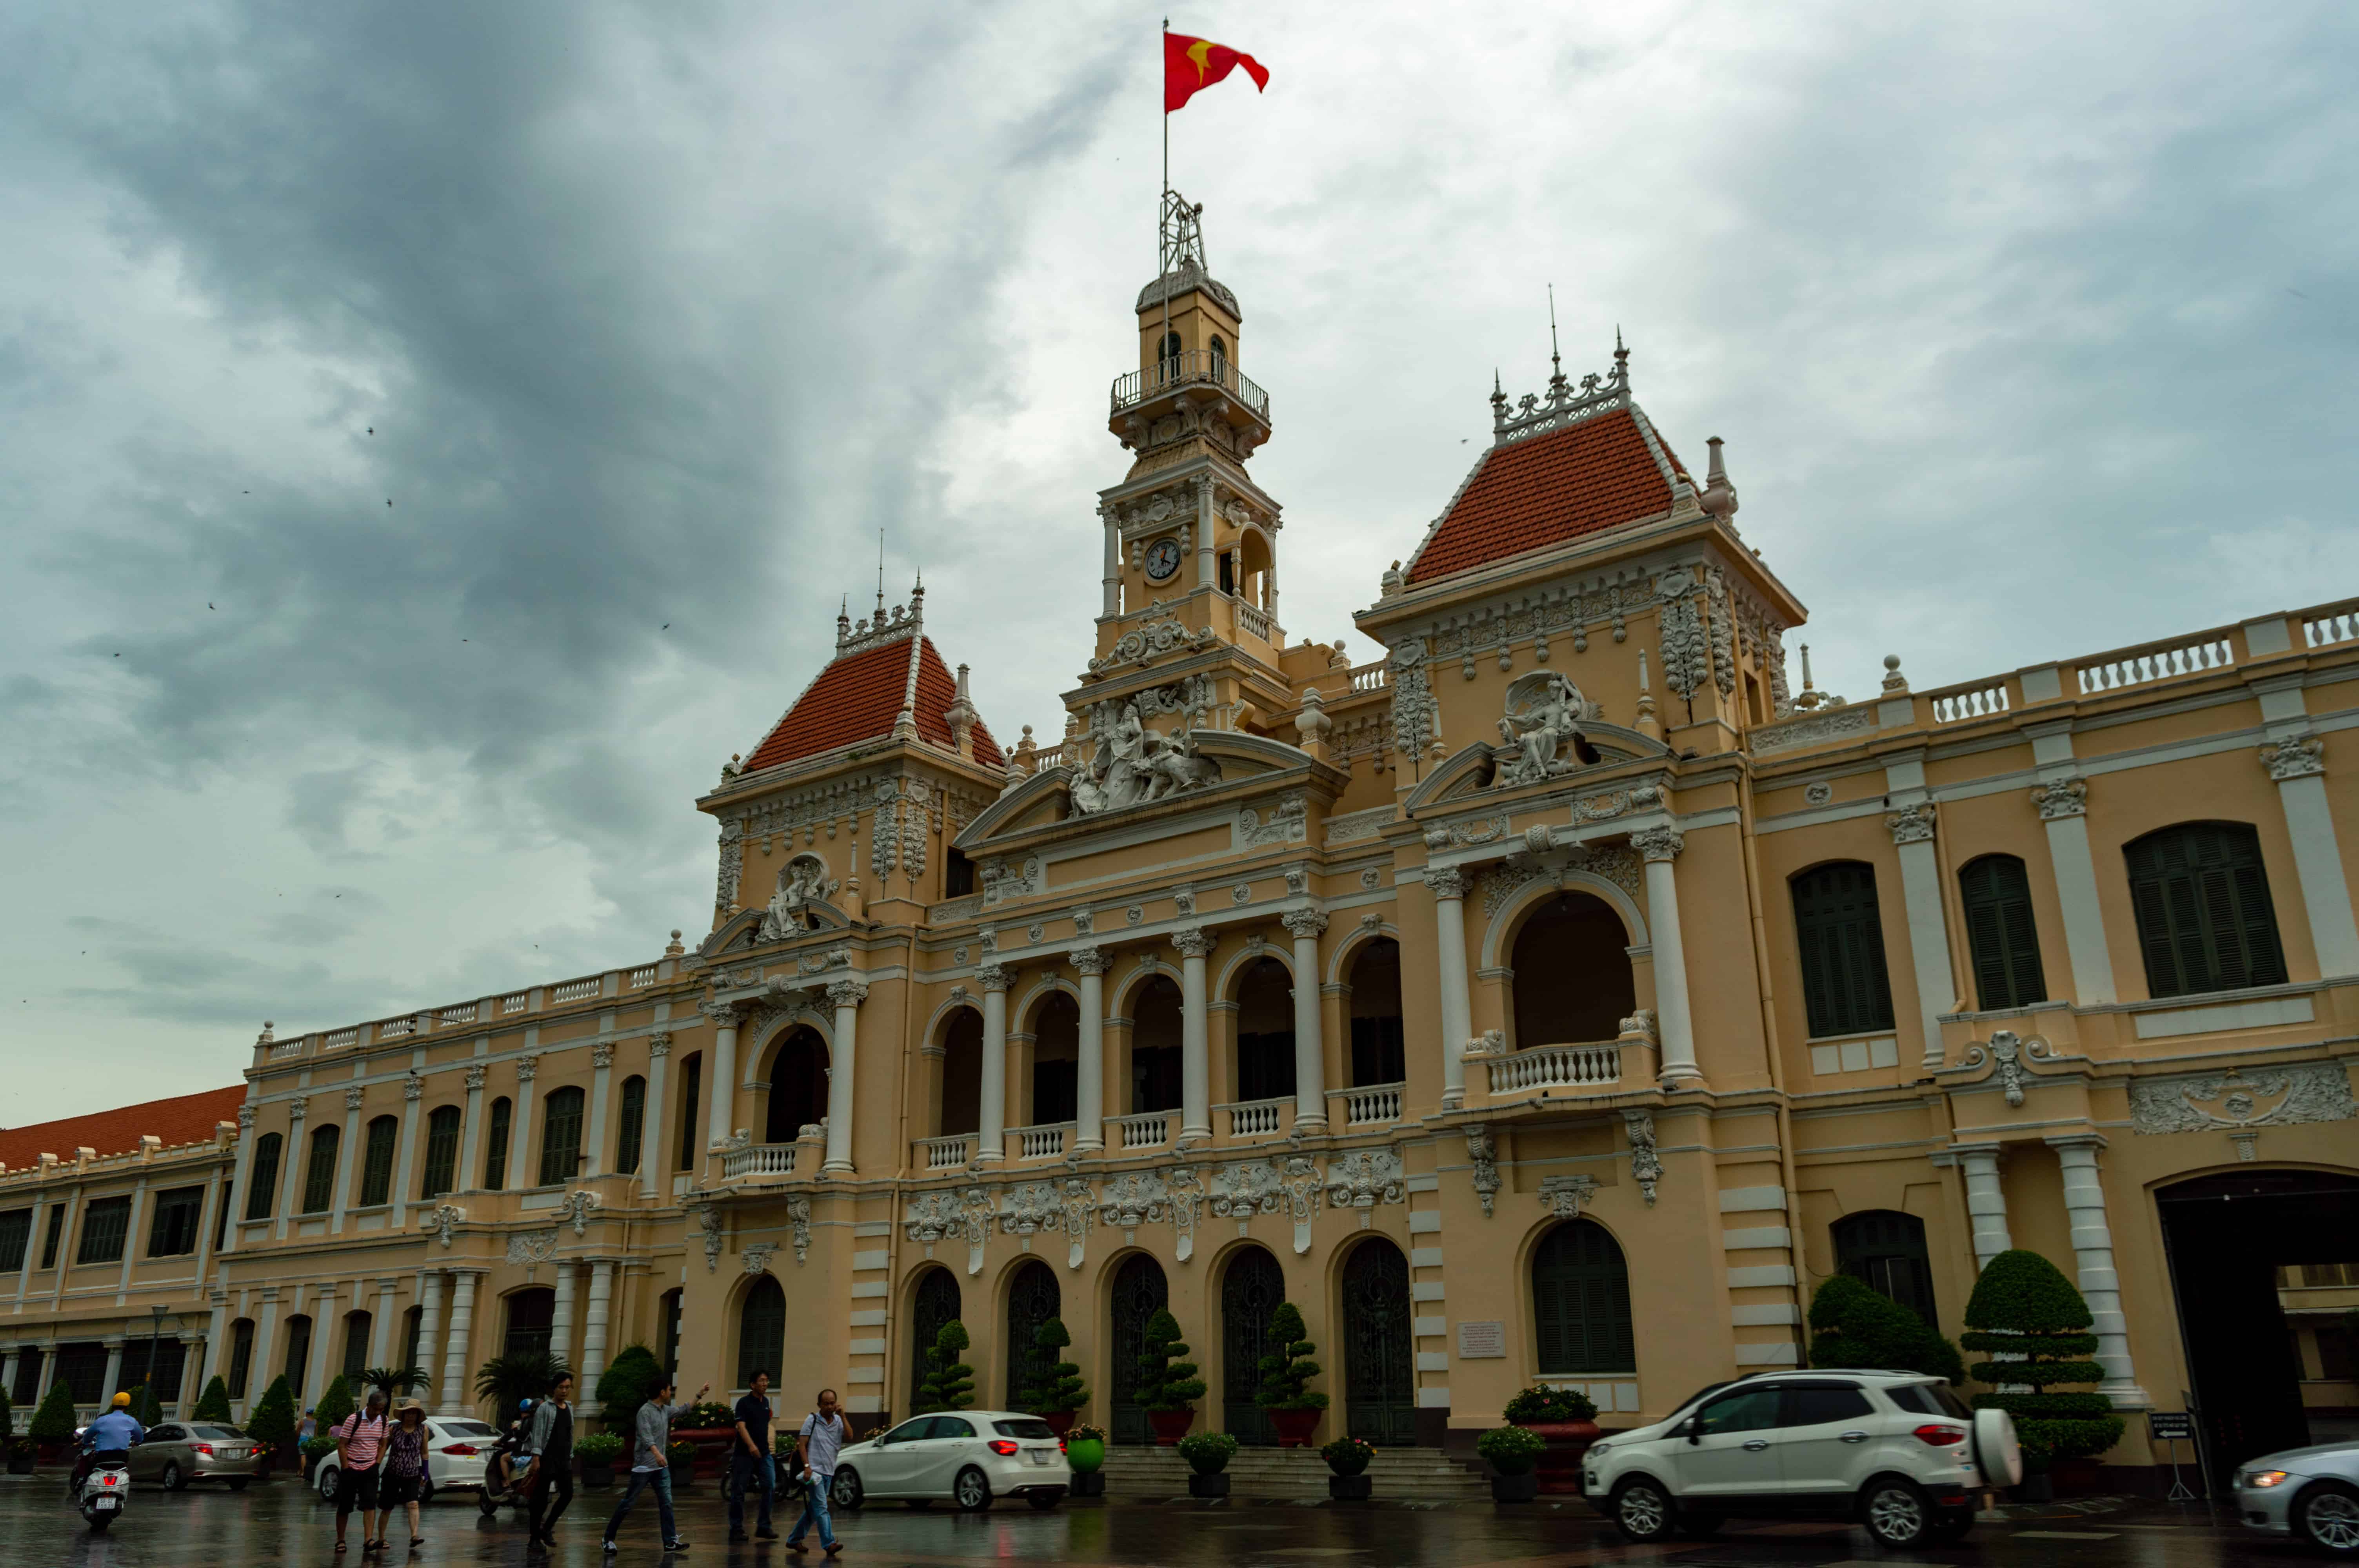 Exploring Ho Chi Minh City in southern Vietnam